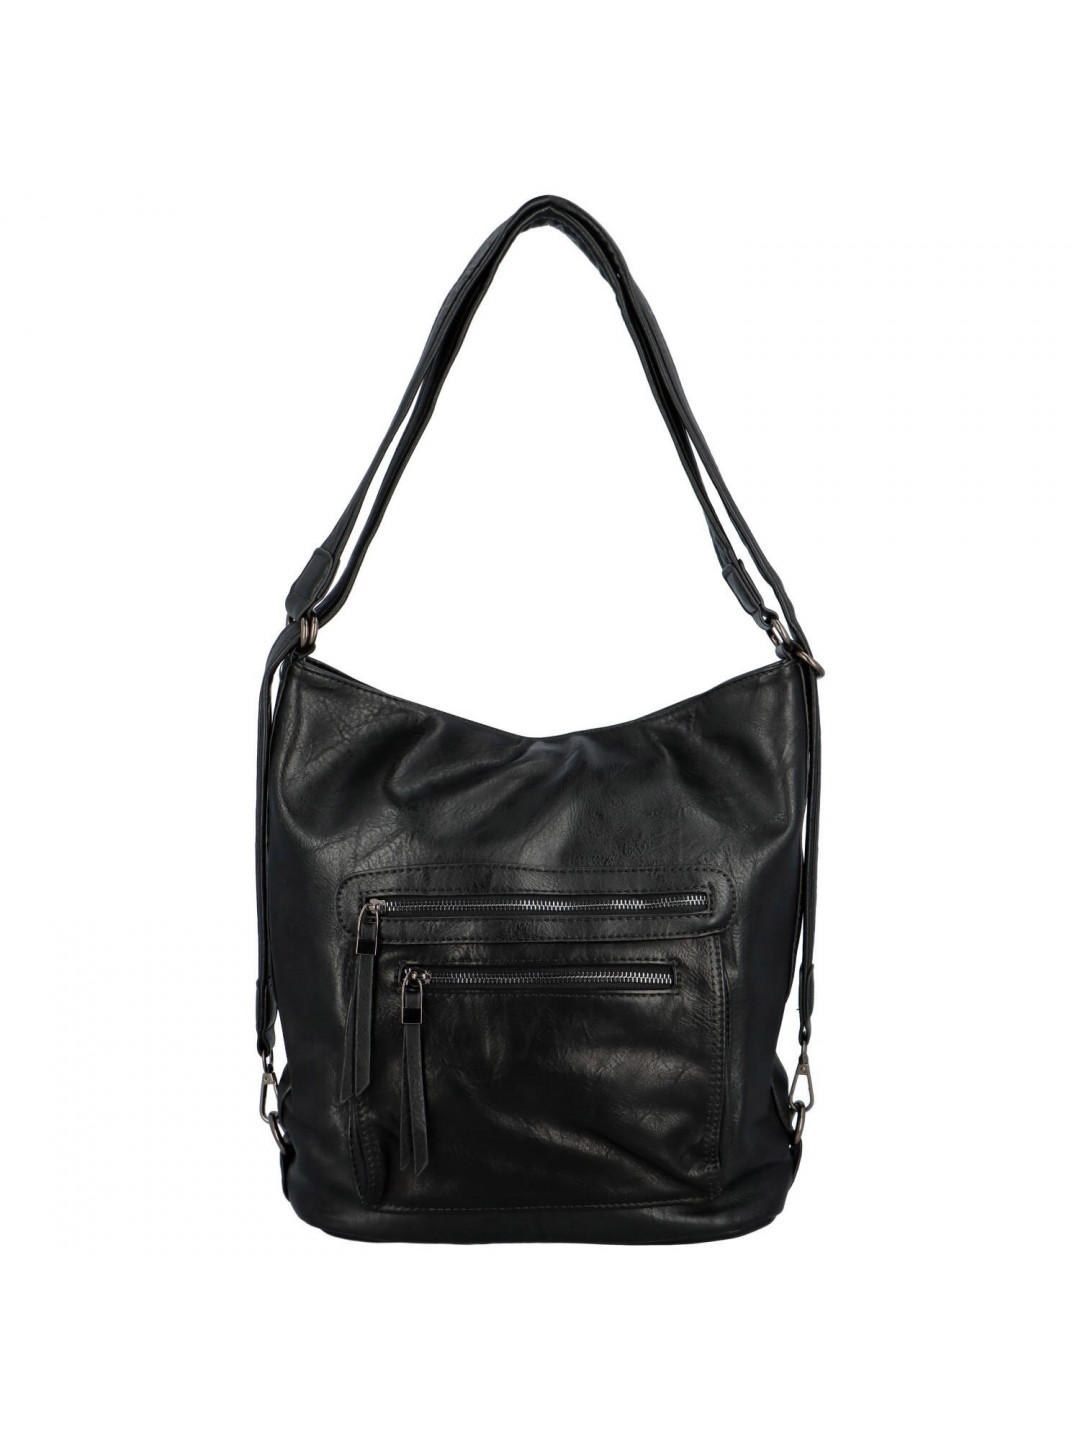 Dámská praktická koženková kabelka batoh Frankie černo-černá